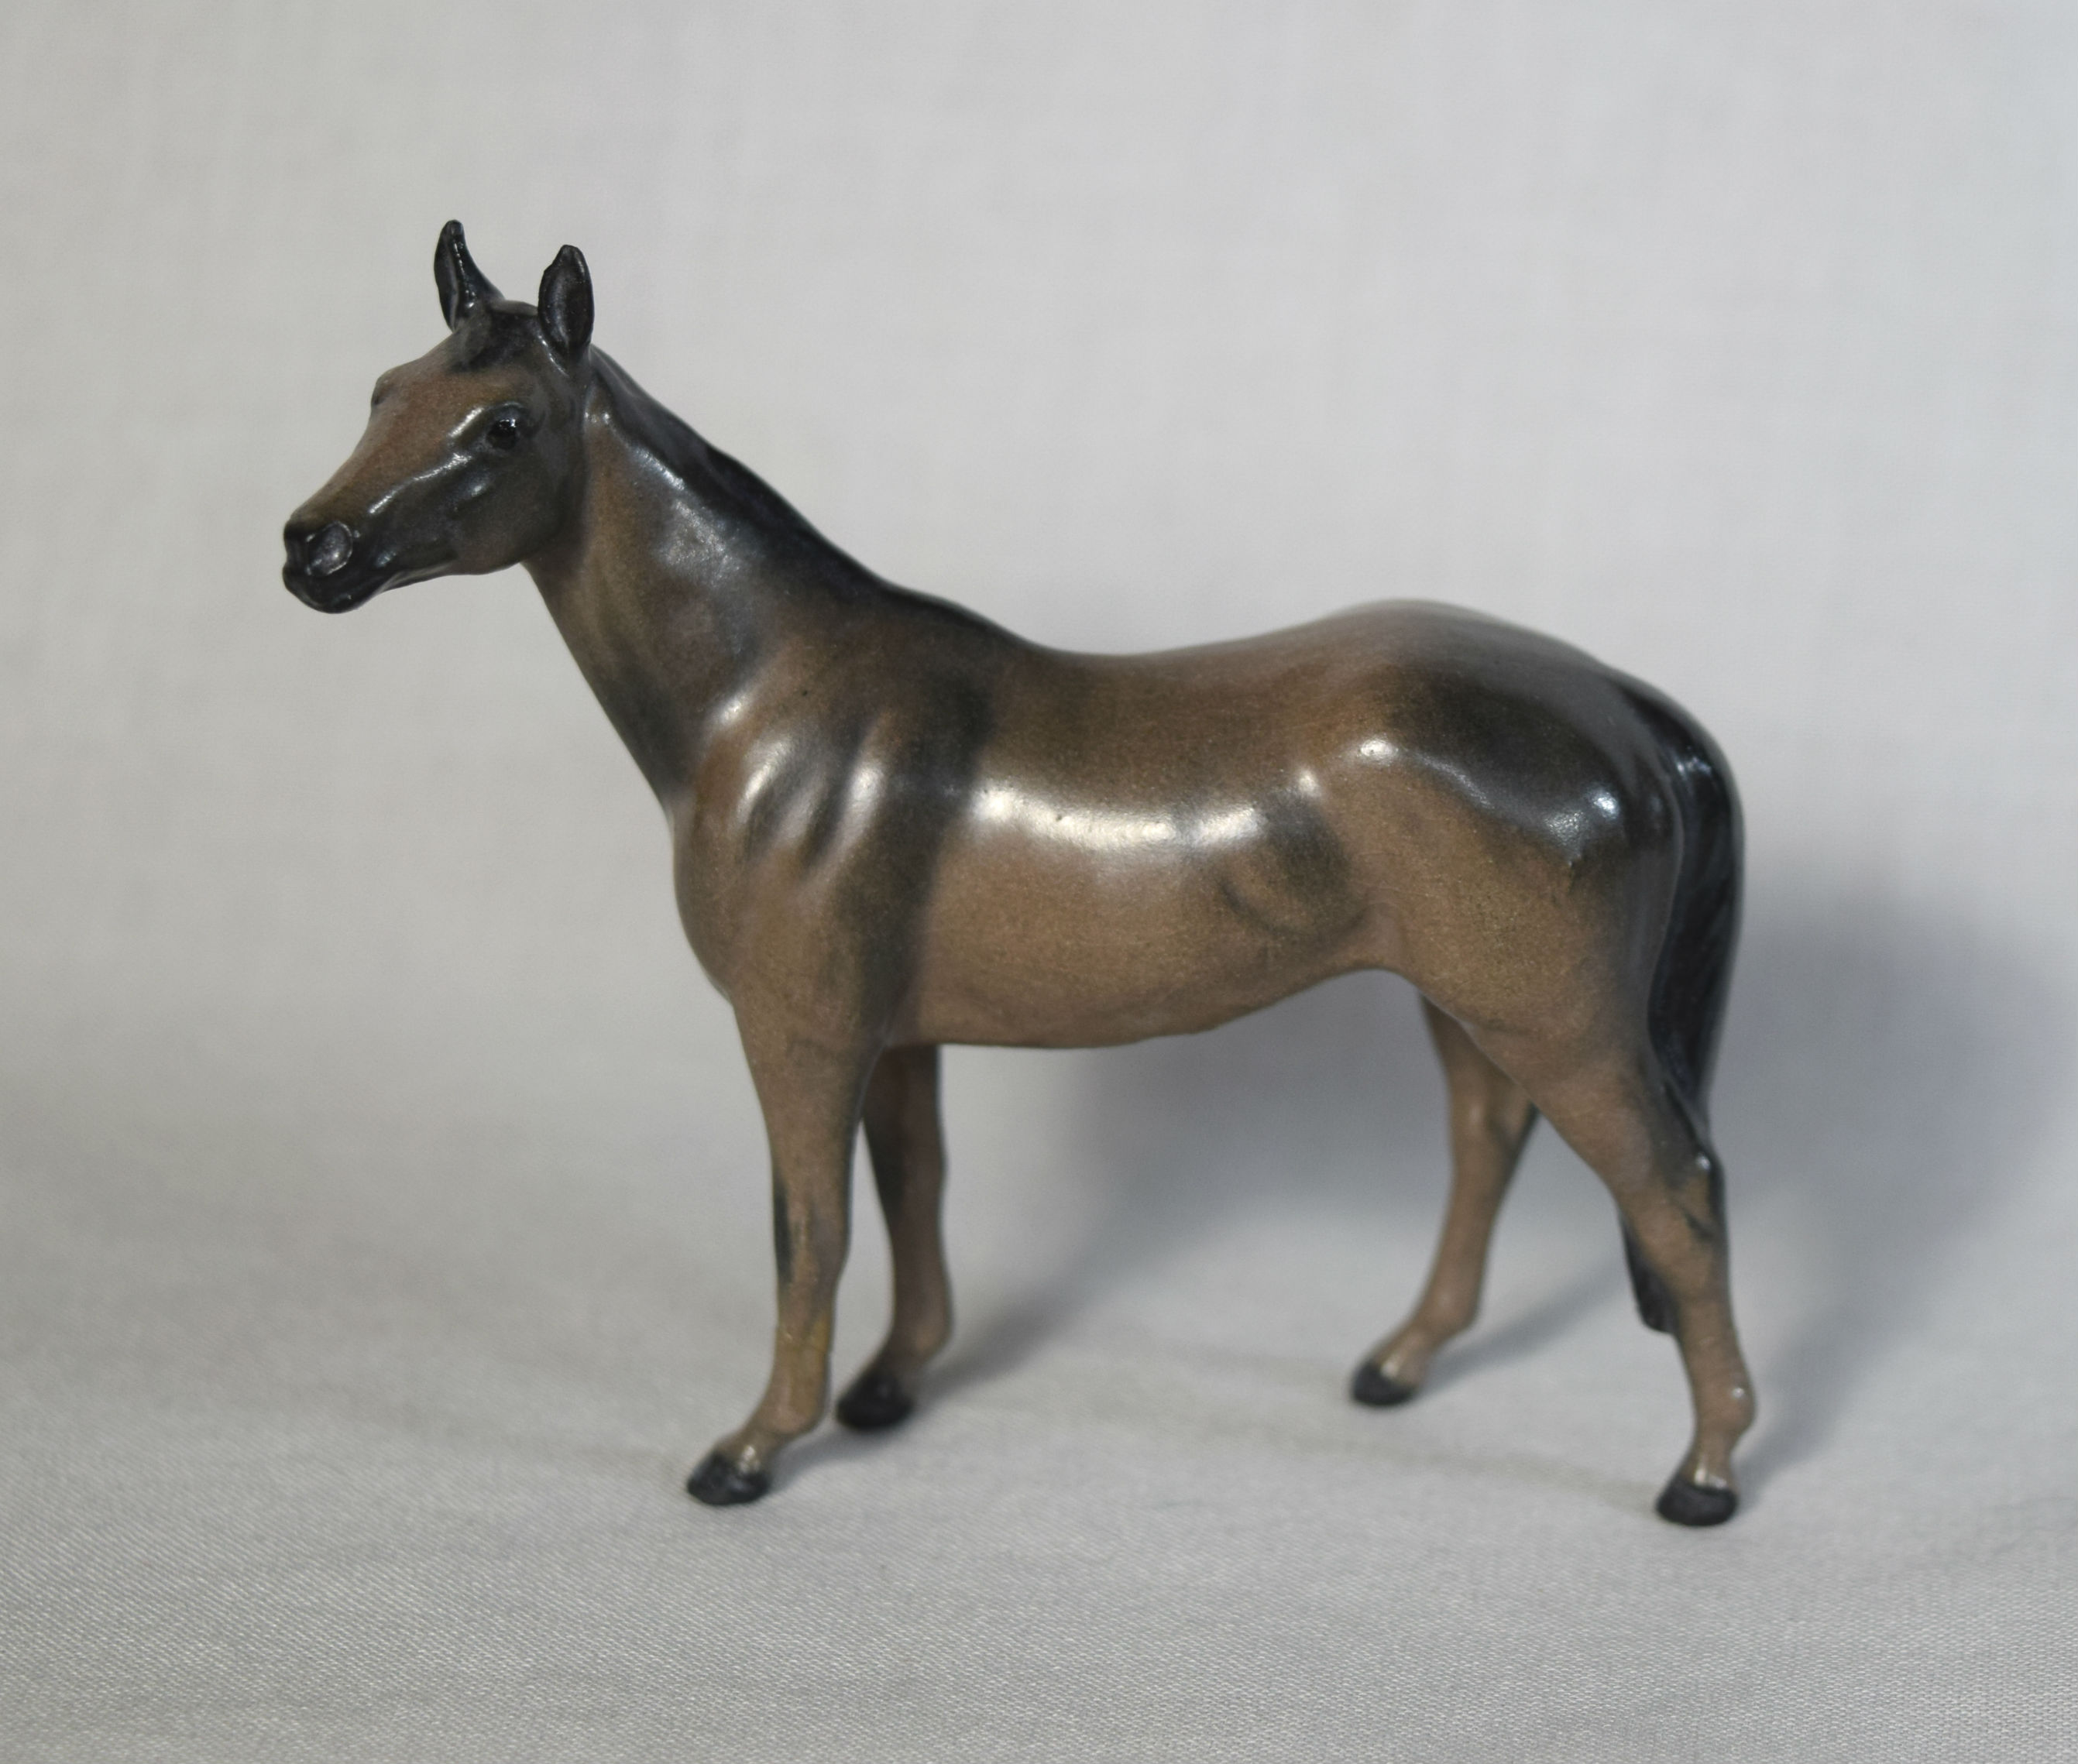 Thoroughbred Racehorse “Native Dancer” main image